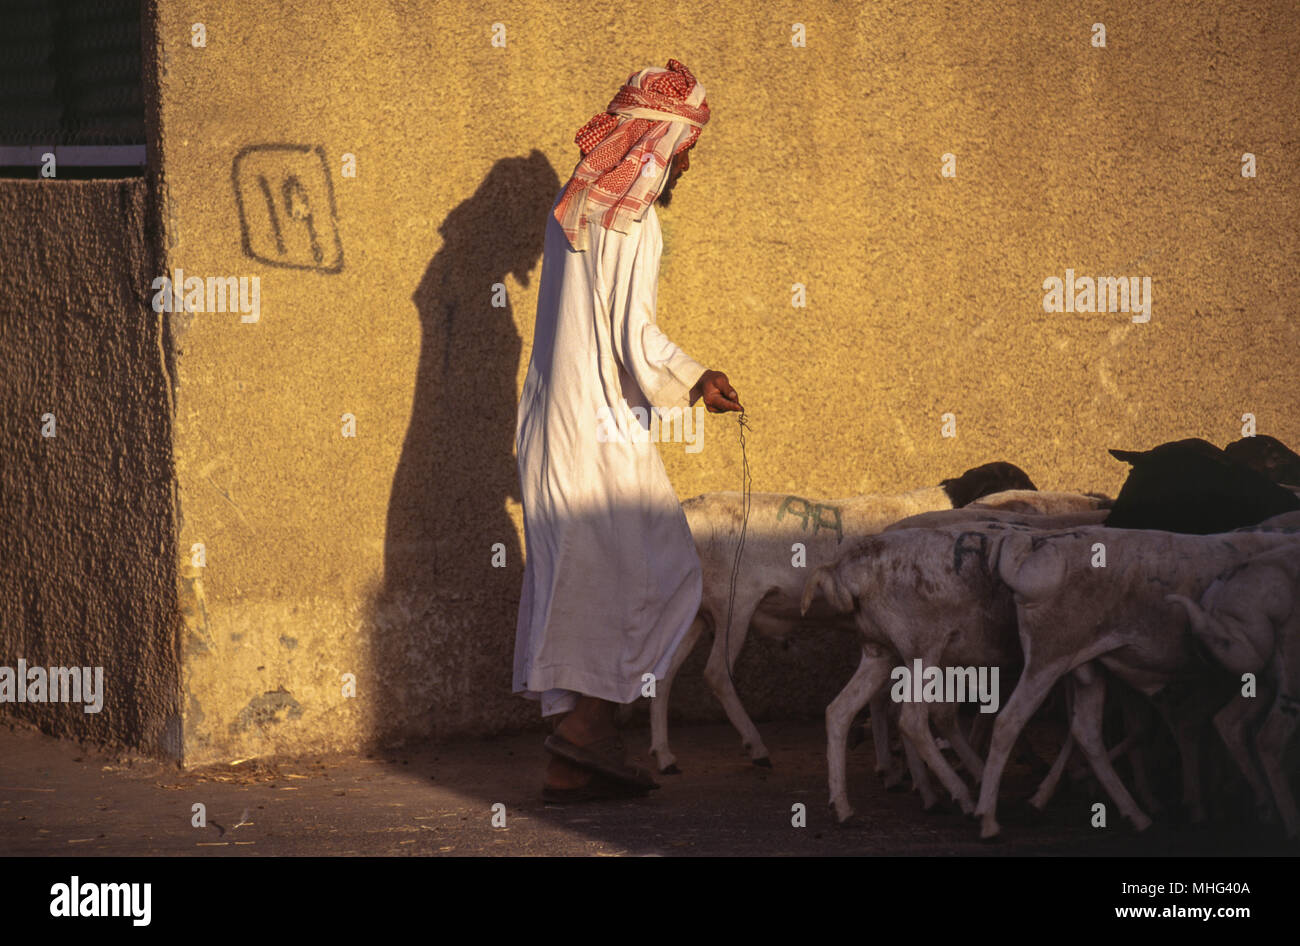 riyadh, saudi arabia -- a third-country laborer slaughterhouse worker on break. Stock Photo